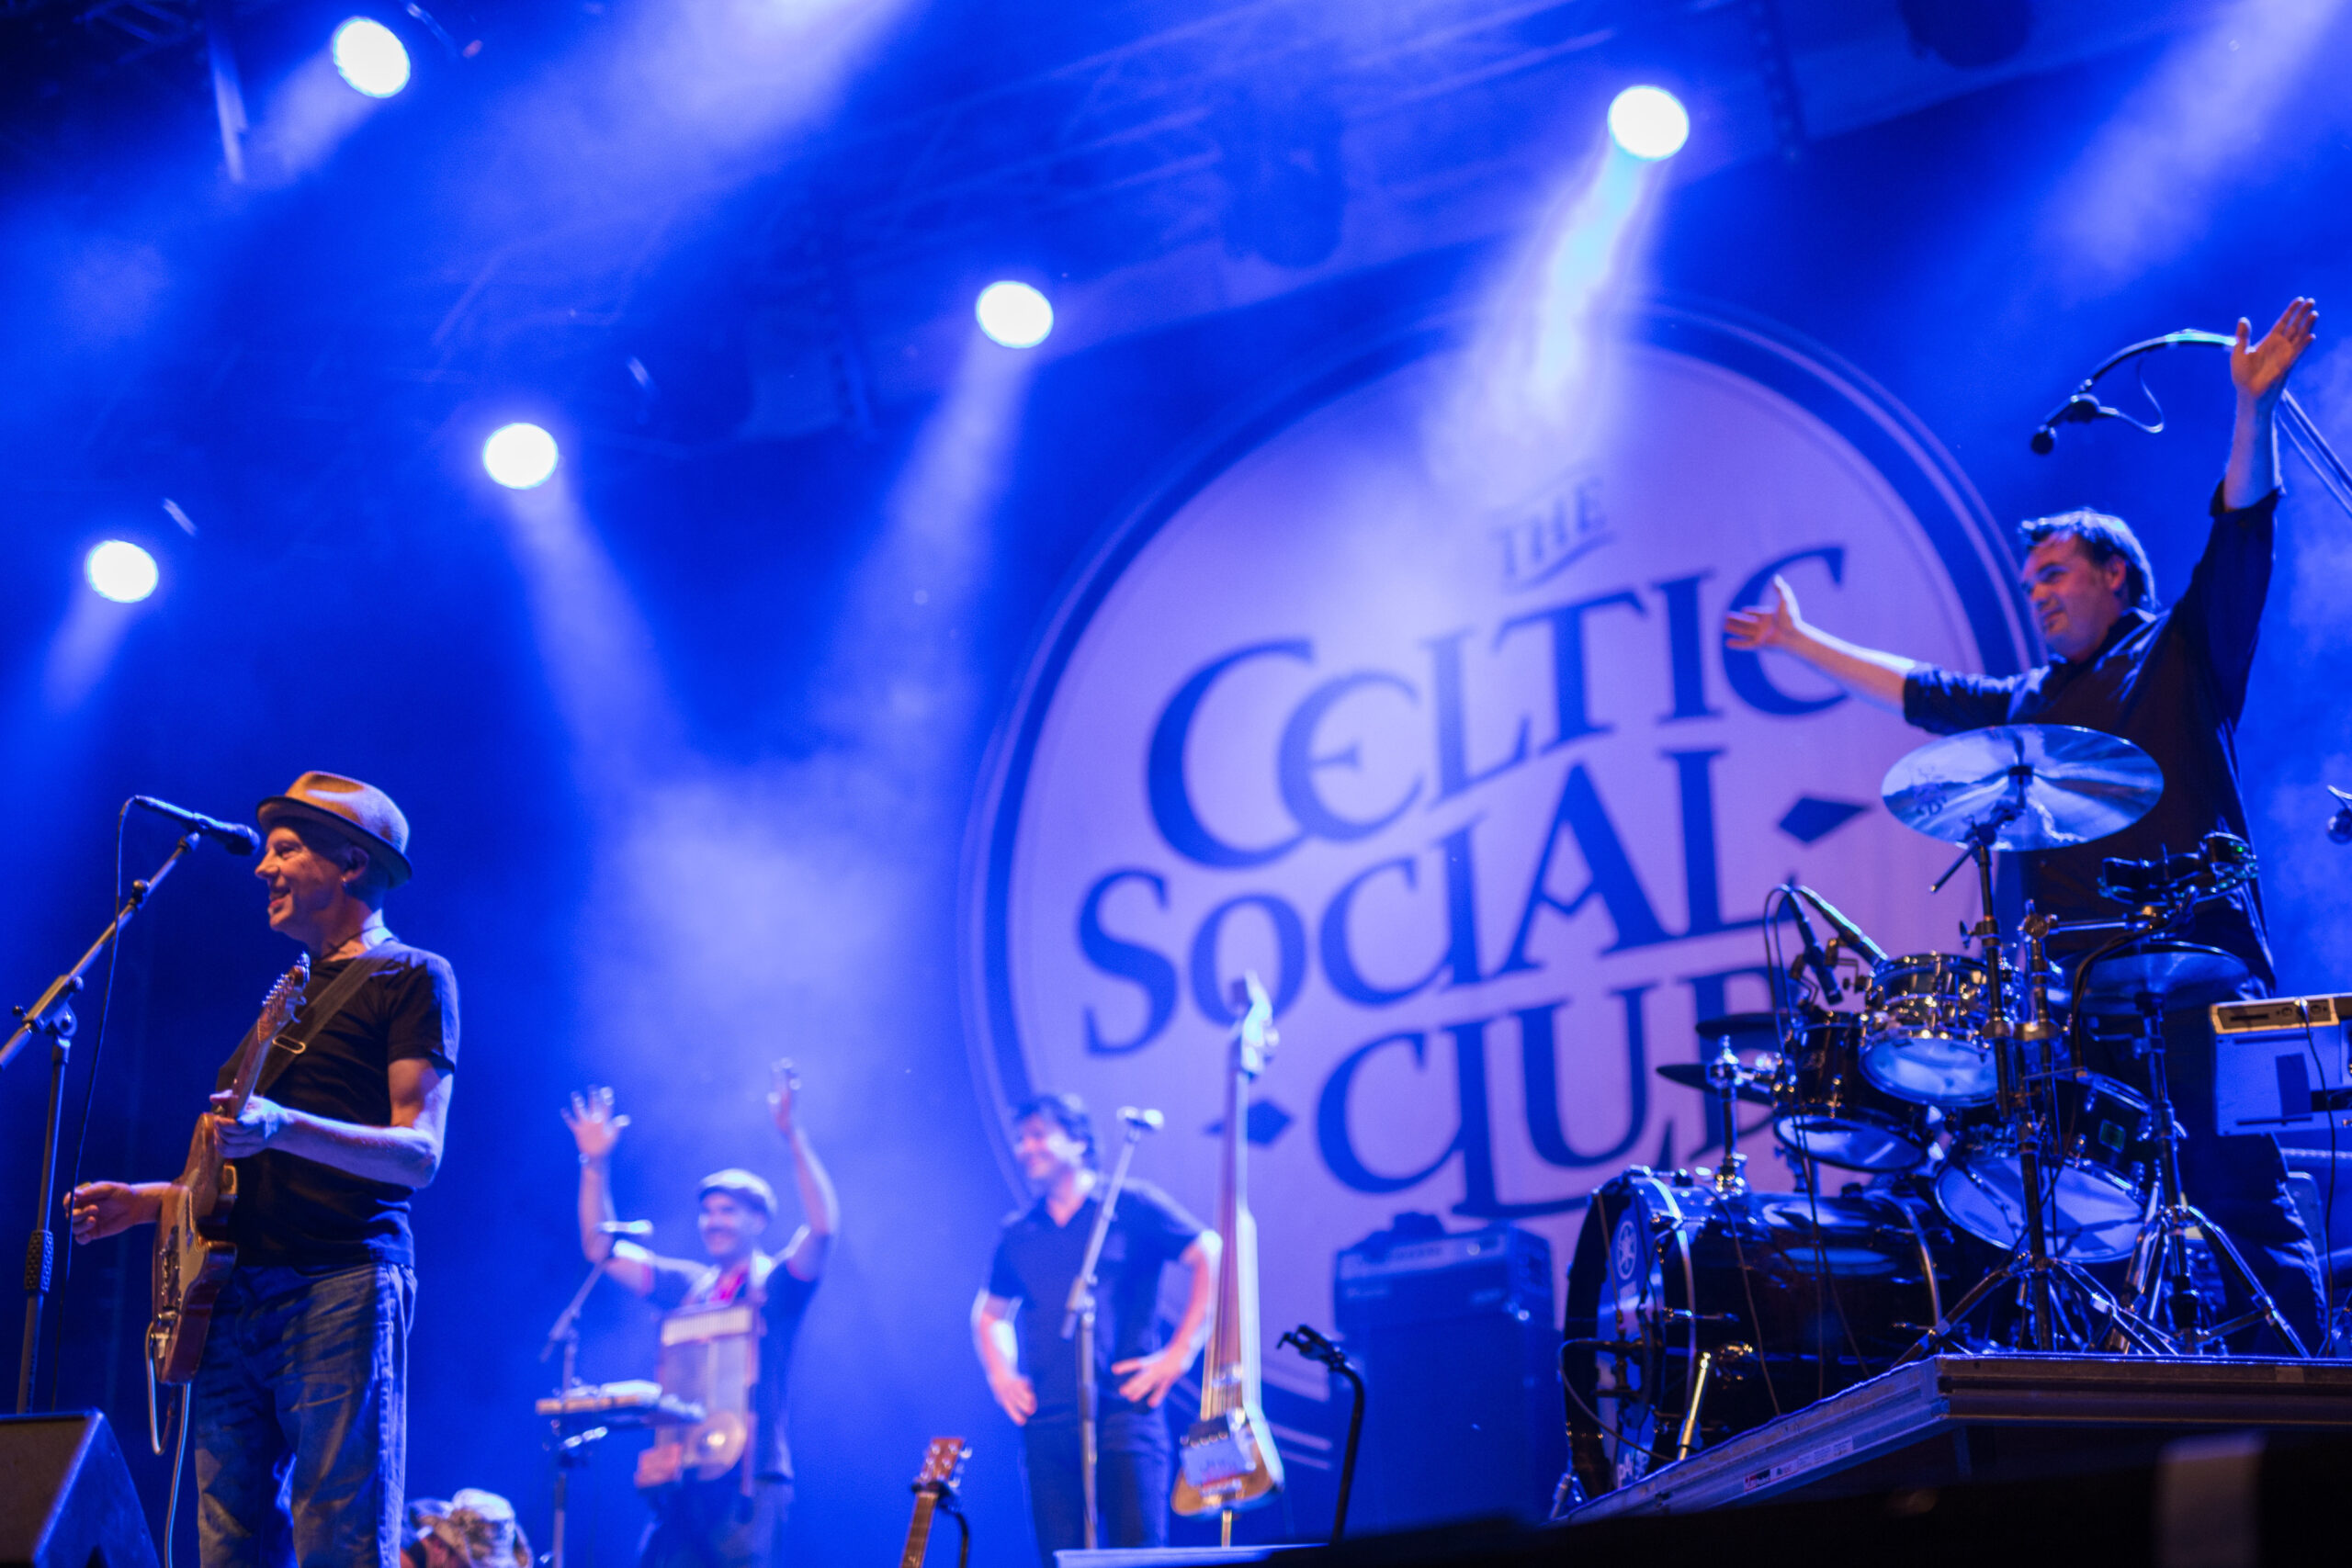 the-celtic-social-club